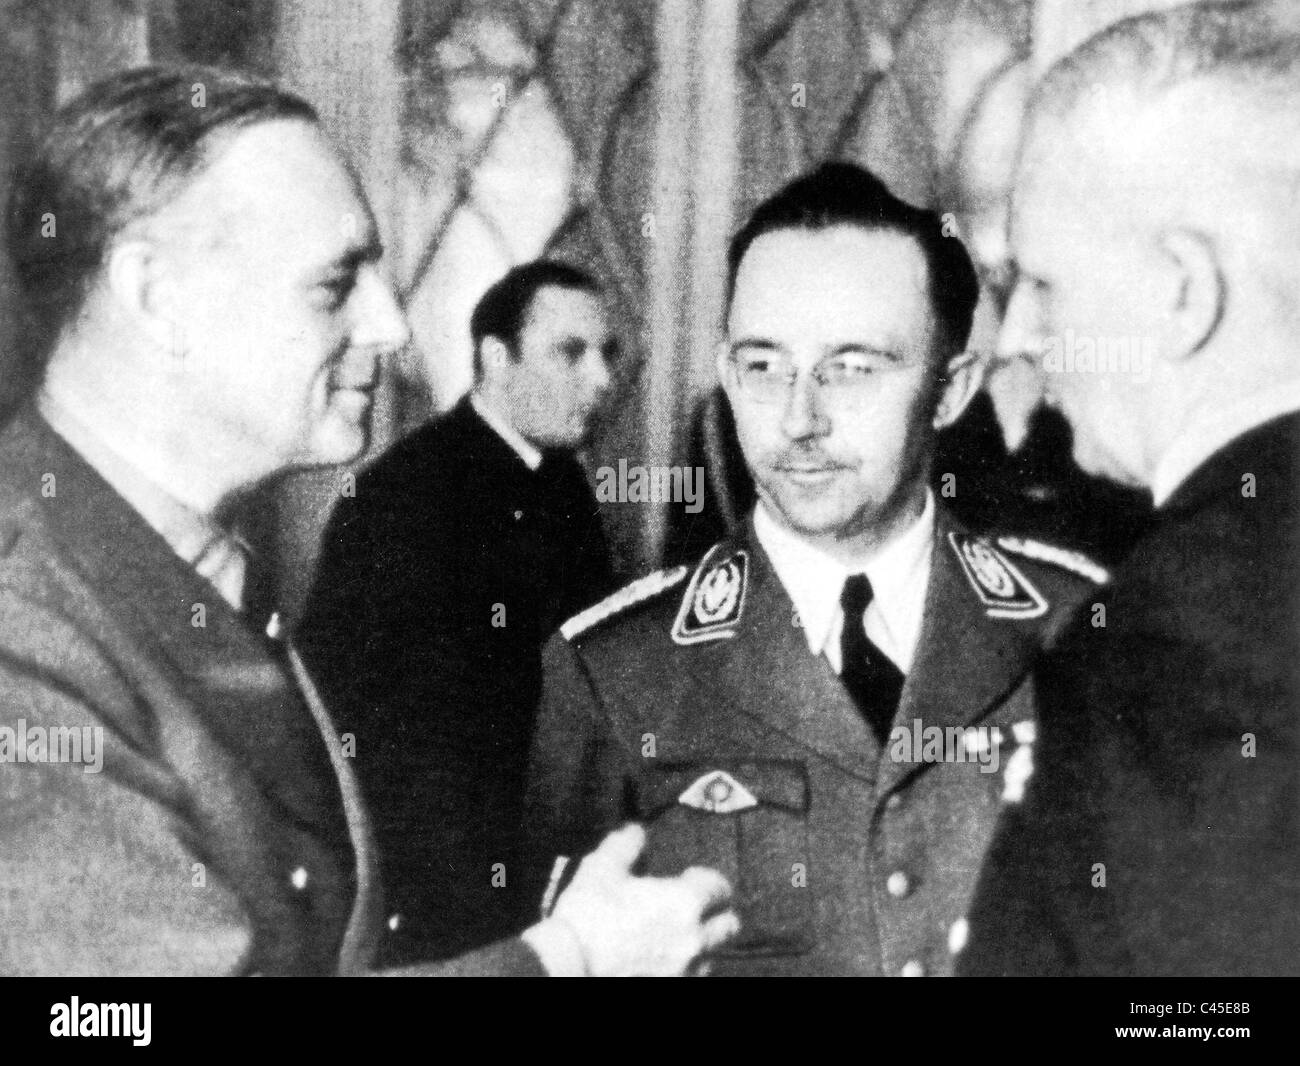 Ribbentrop, Himmler and Weizsaecker on a diplomatic reception at the Hotel Adlon, Berlin 1942 Stock Photo